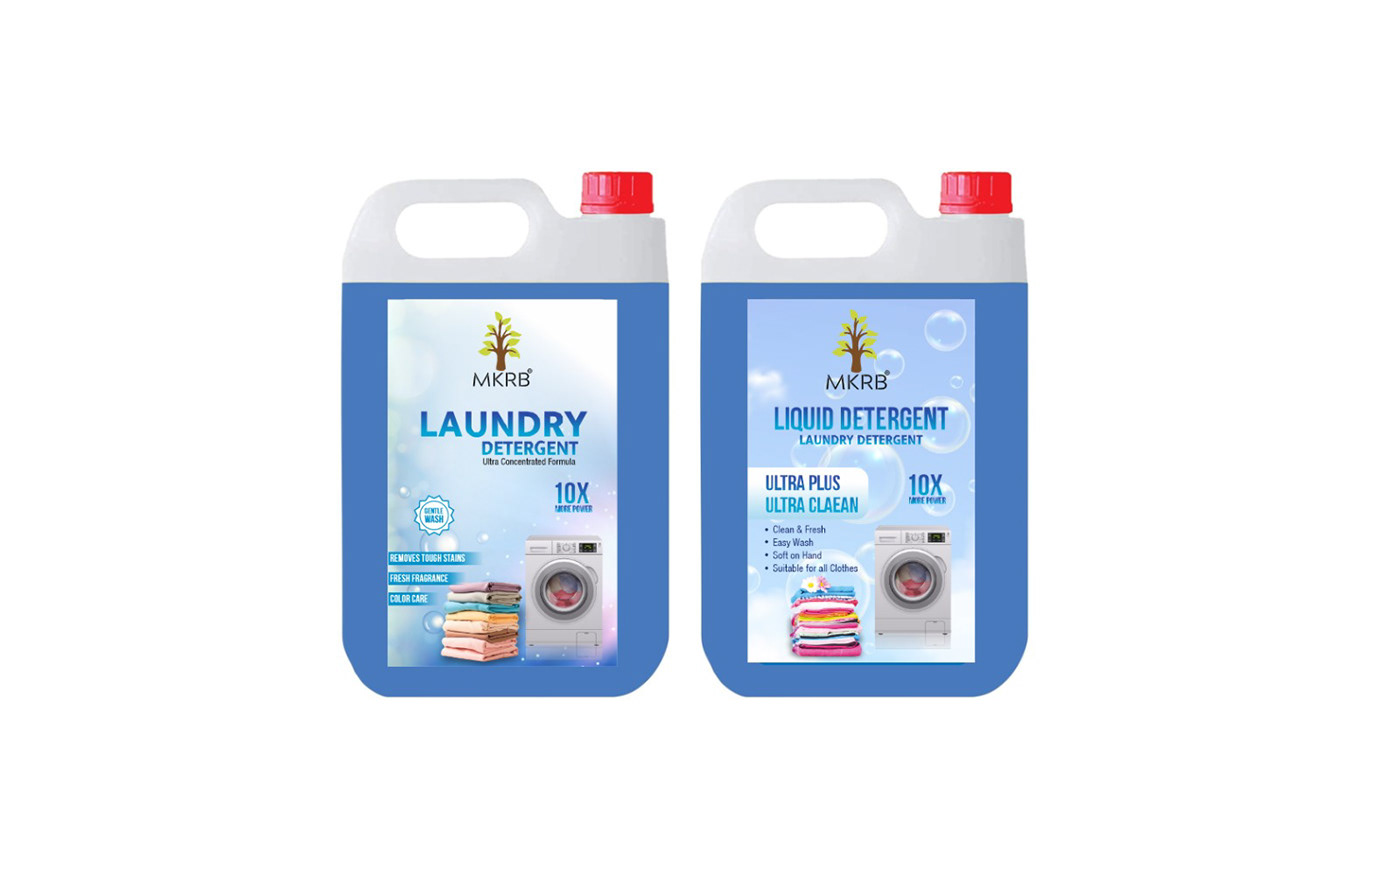 Detergent Liquid detergent Pouch Design  label design Mockup label packaging product design  brand identity Graphic Designer Logo Design